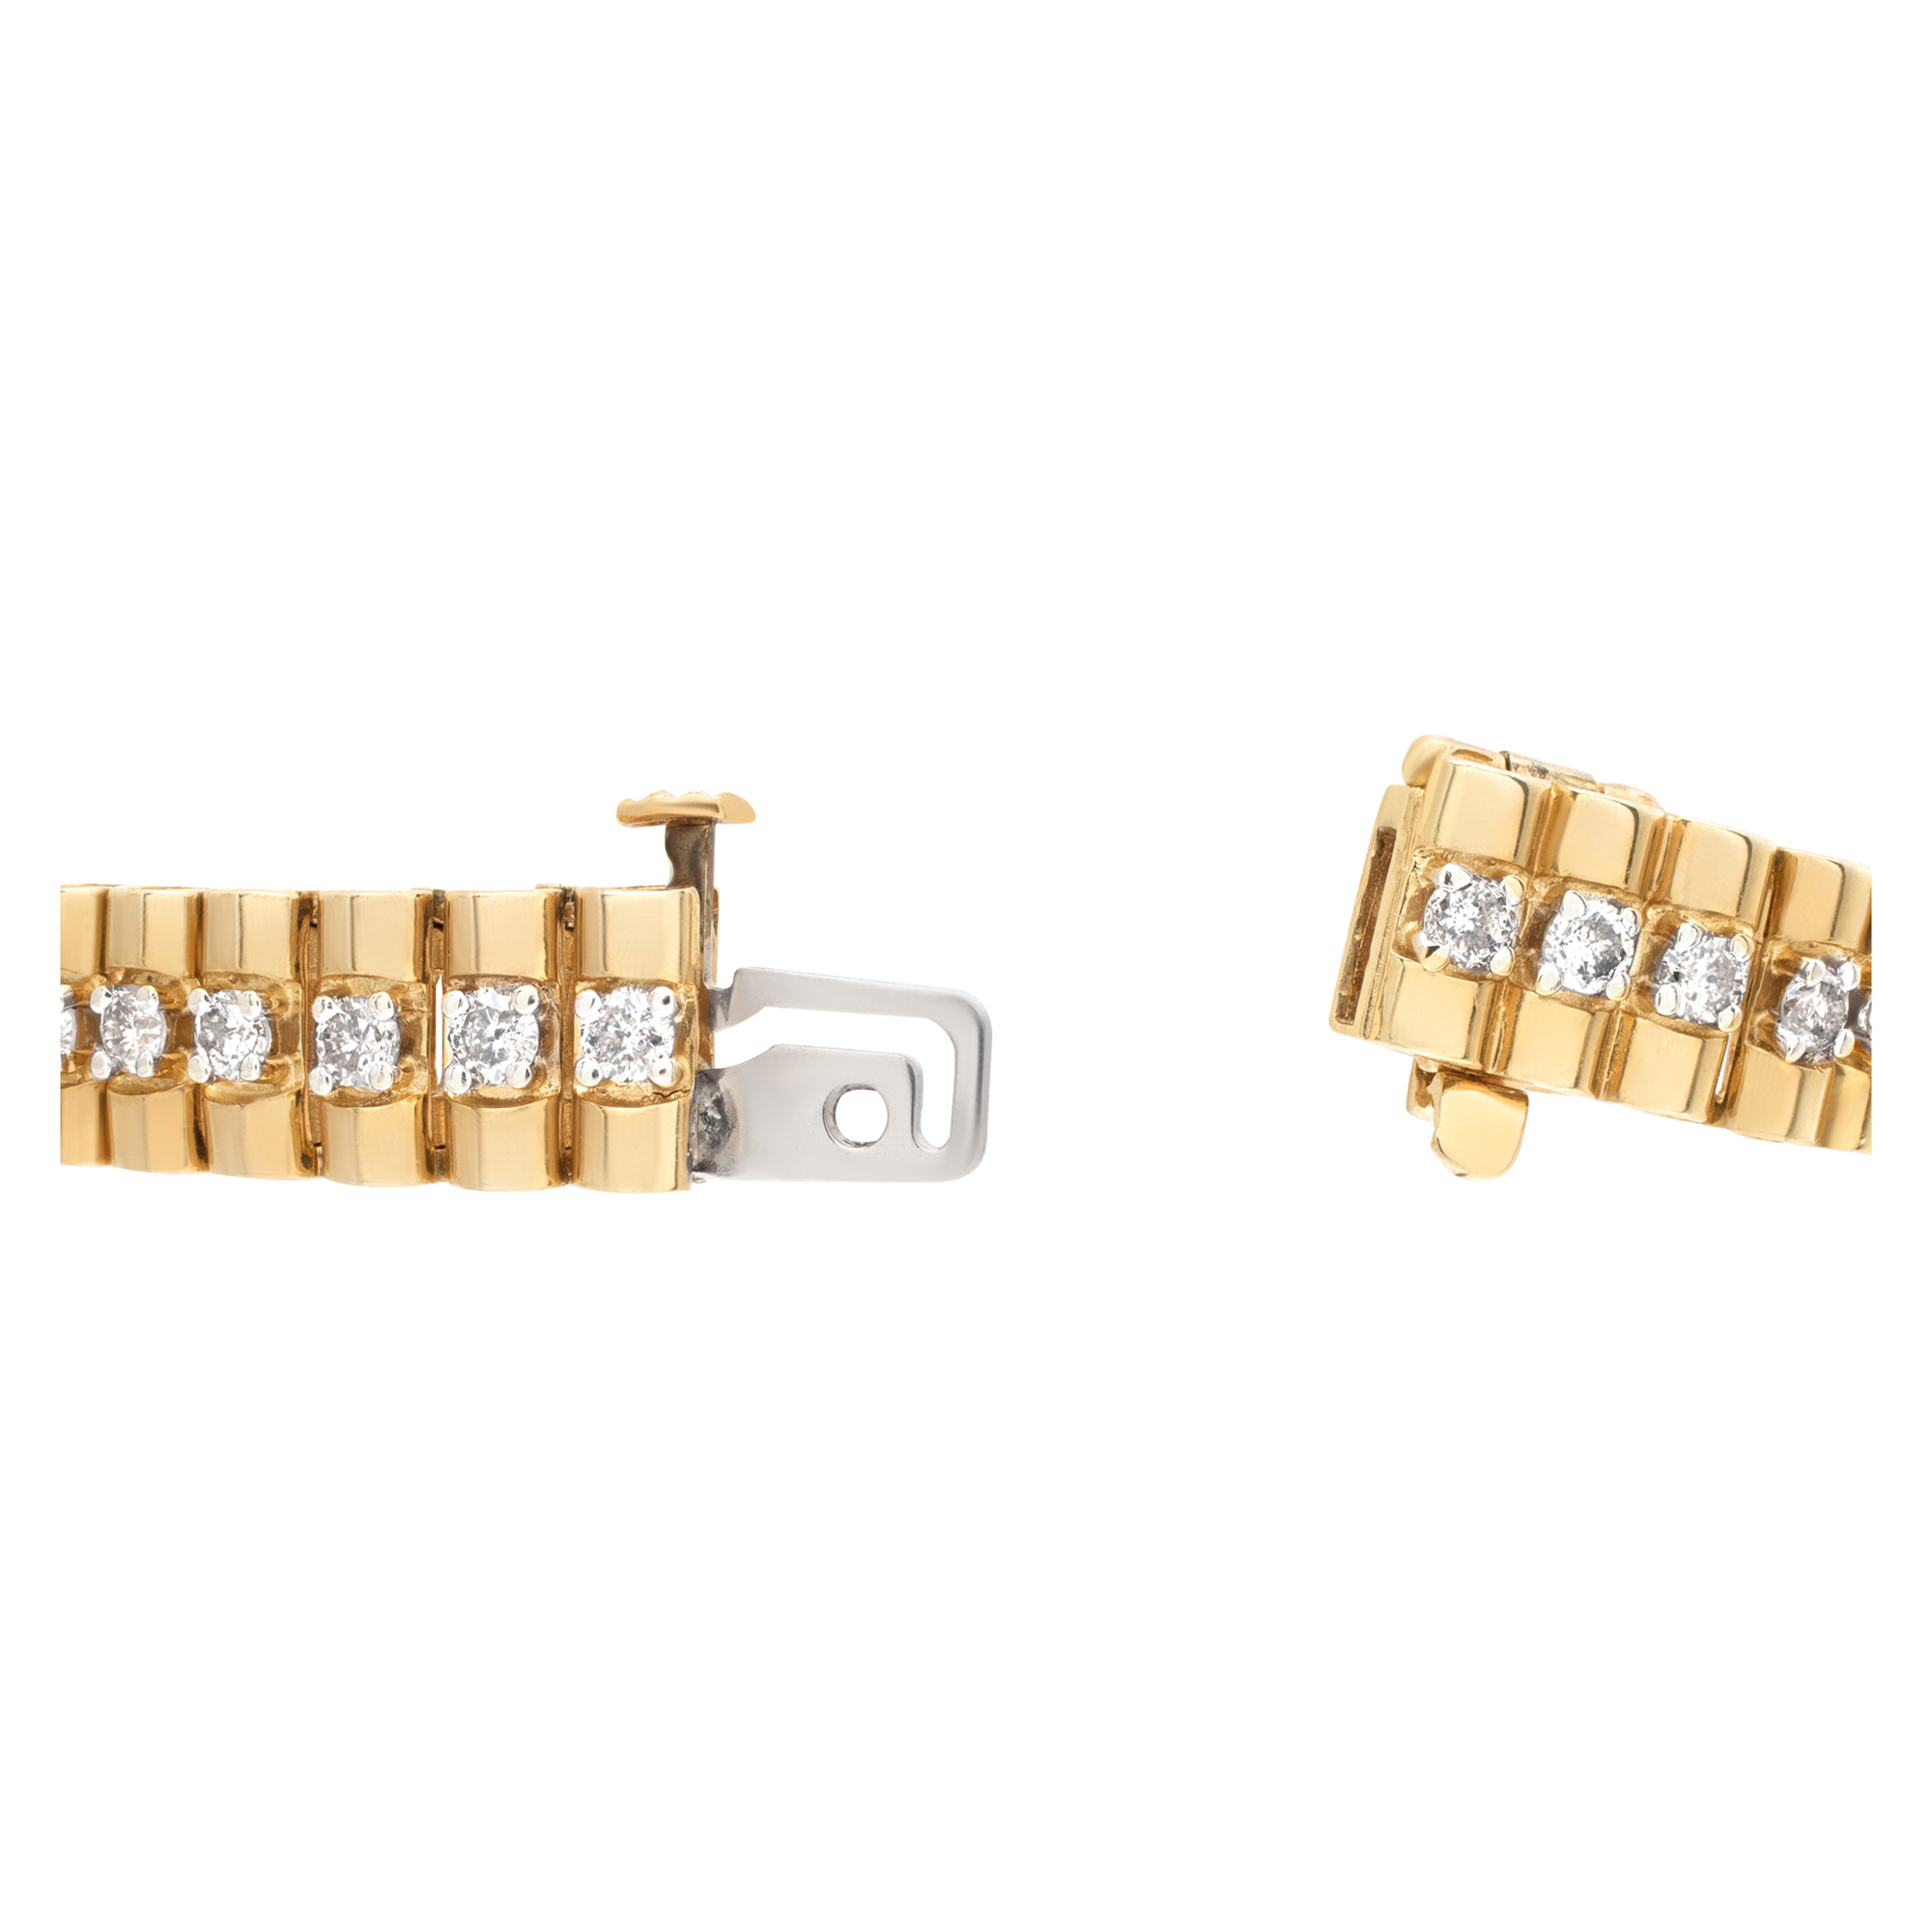 Stylish president style link bracelet with approximately 3 carats full cut round brilliant diamonds set in 14k yellow gold image 4